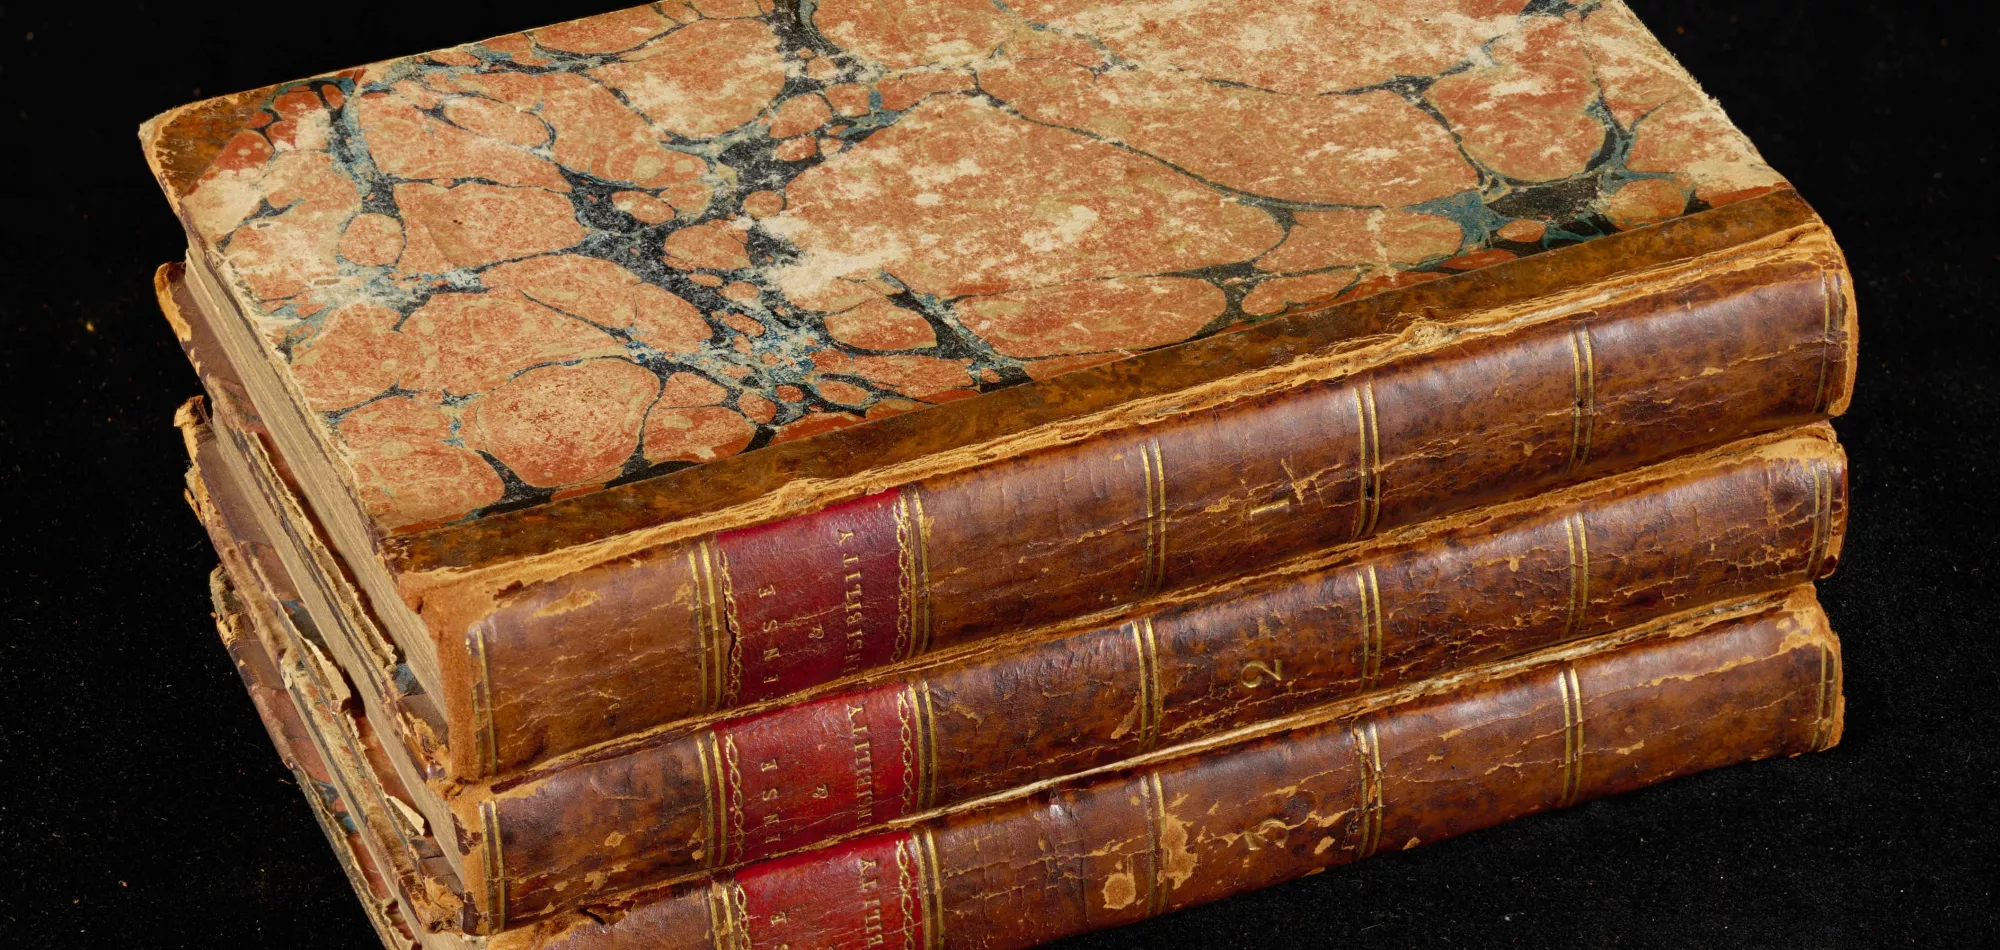 Binding of Jane Austen first editions